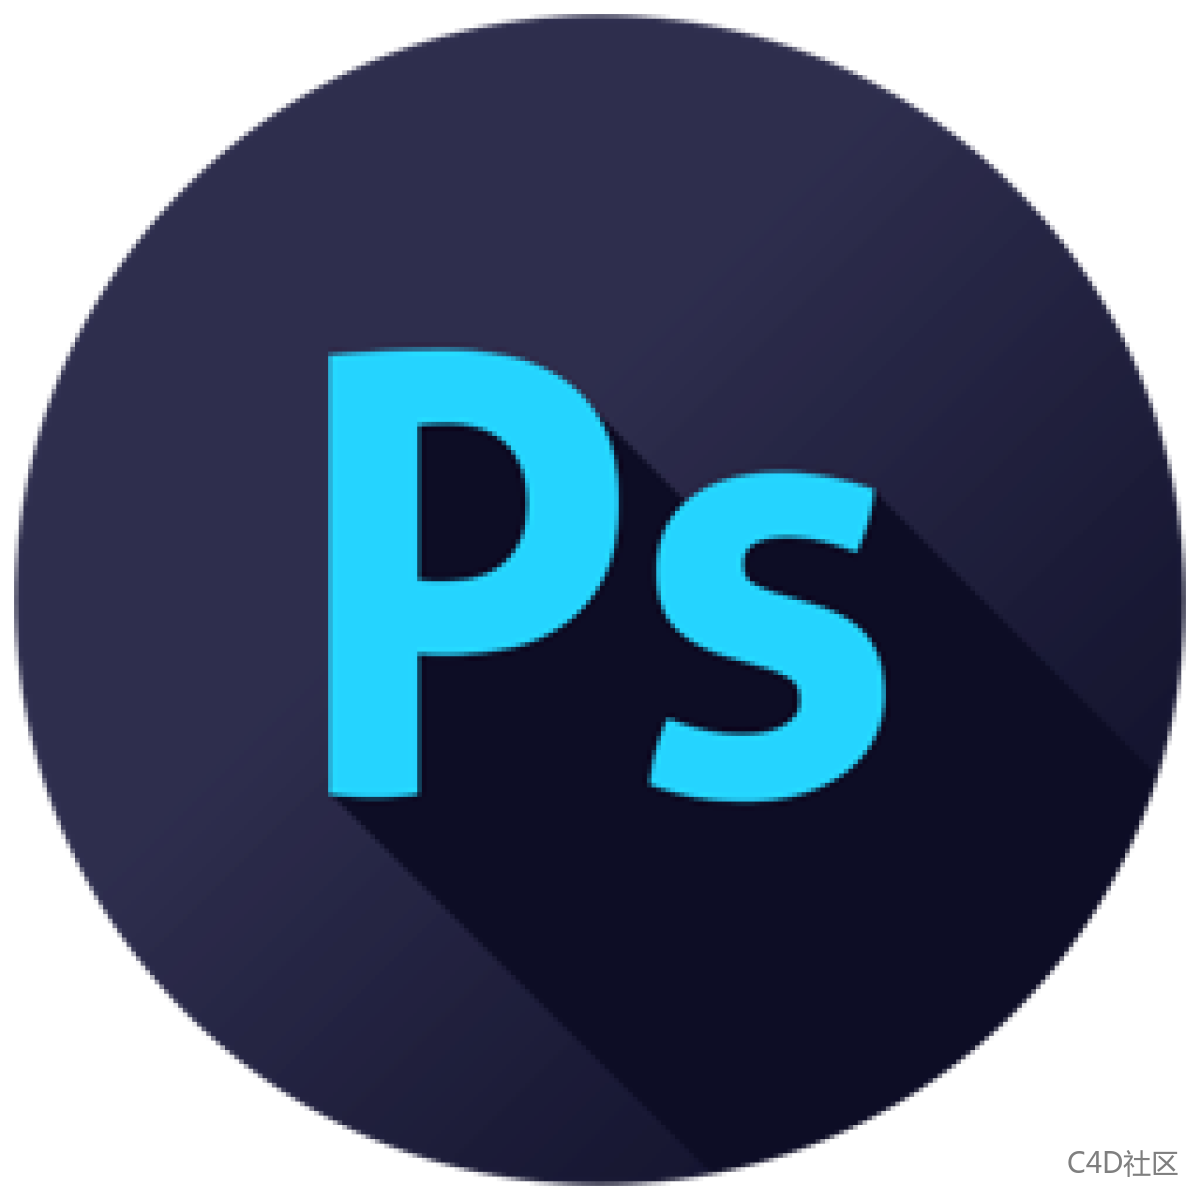 Adobe Photoshop 2021 22.4.2.242 ACR13.3 SP平面设计软件破解版